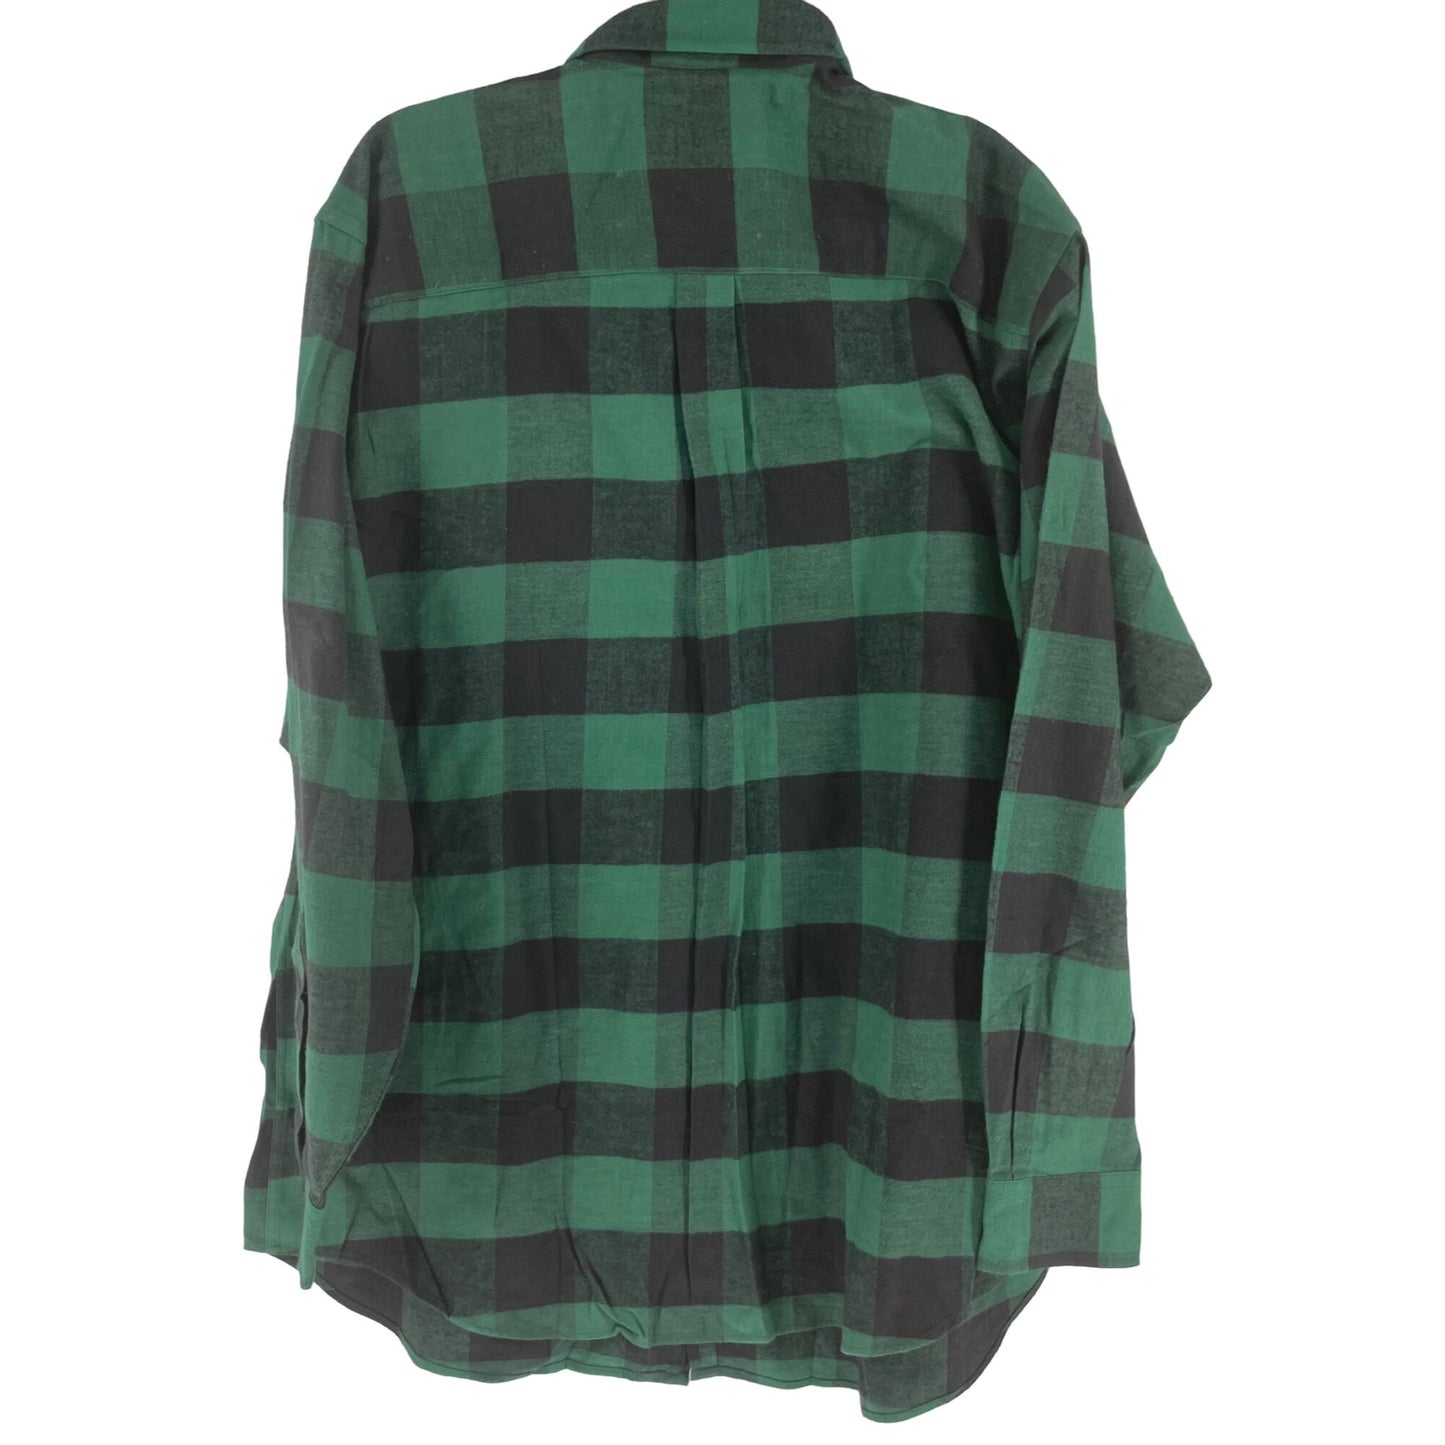 NWT The Great Plains Men's Size XL Green & Black Checkered Plaid Button-Down Flannel Shirt